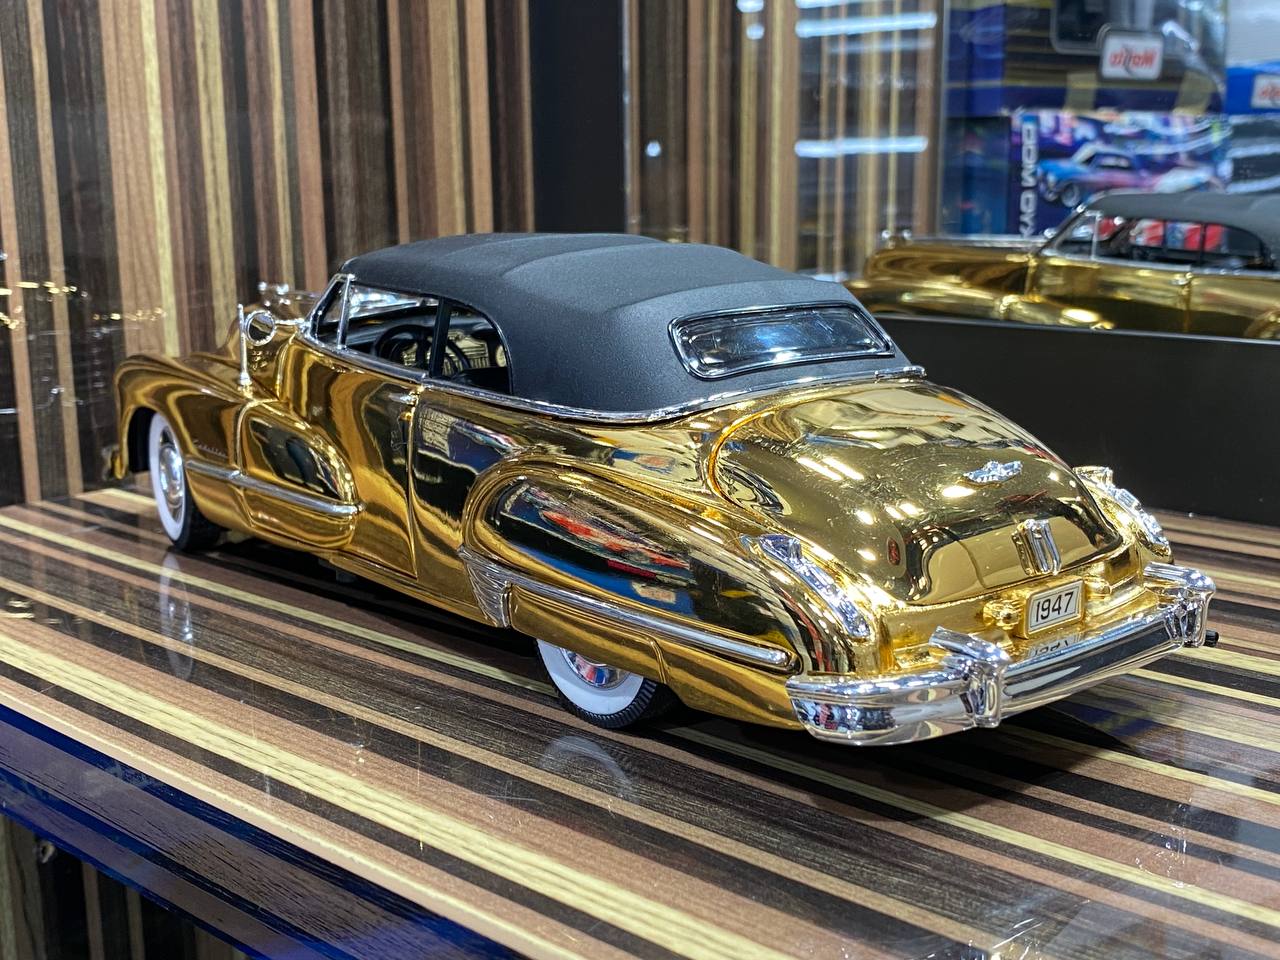 1/18 Diecast Miniature Cadillac 47 Series 62 Anson Gold Scale Model Car